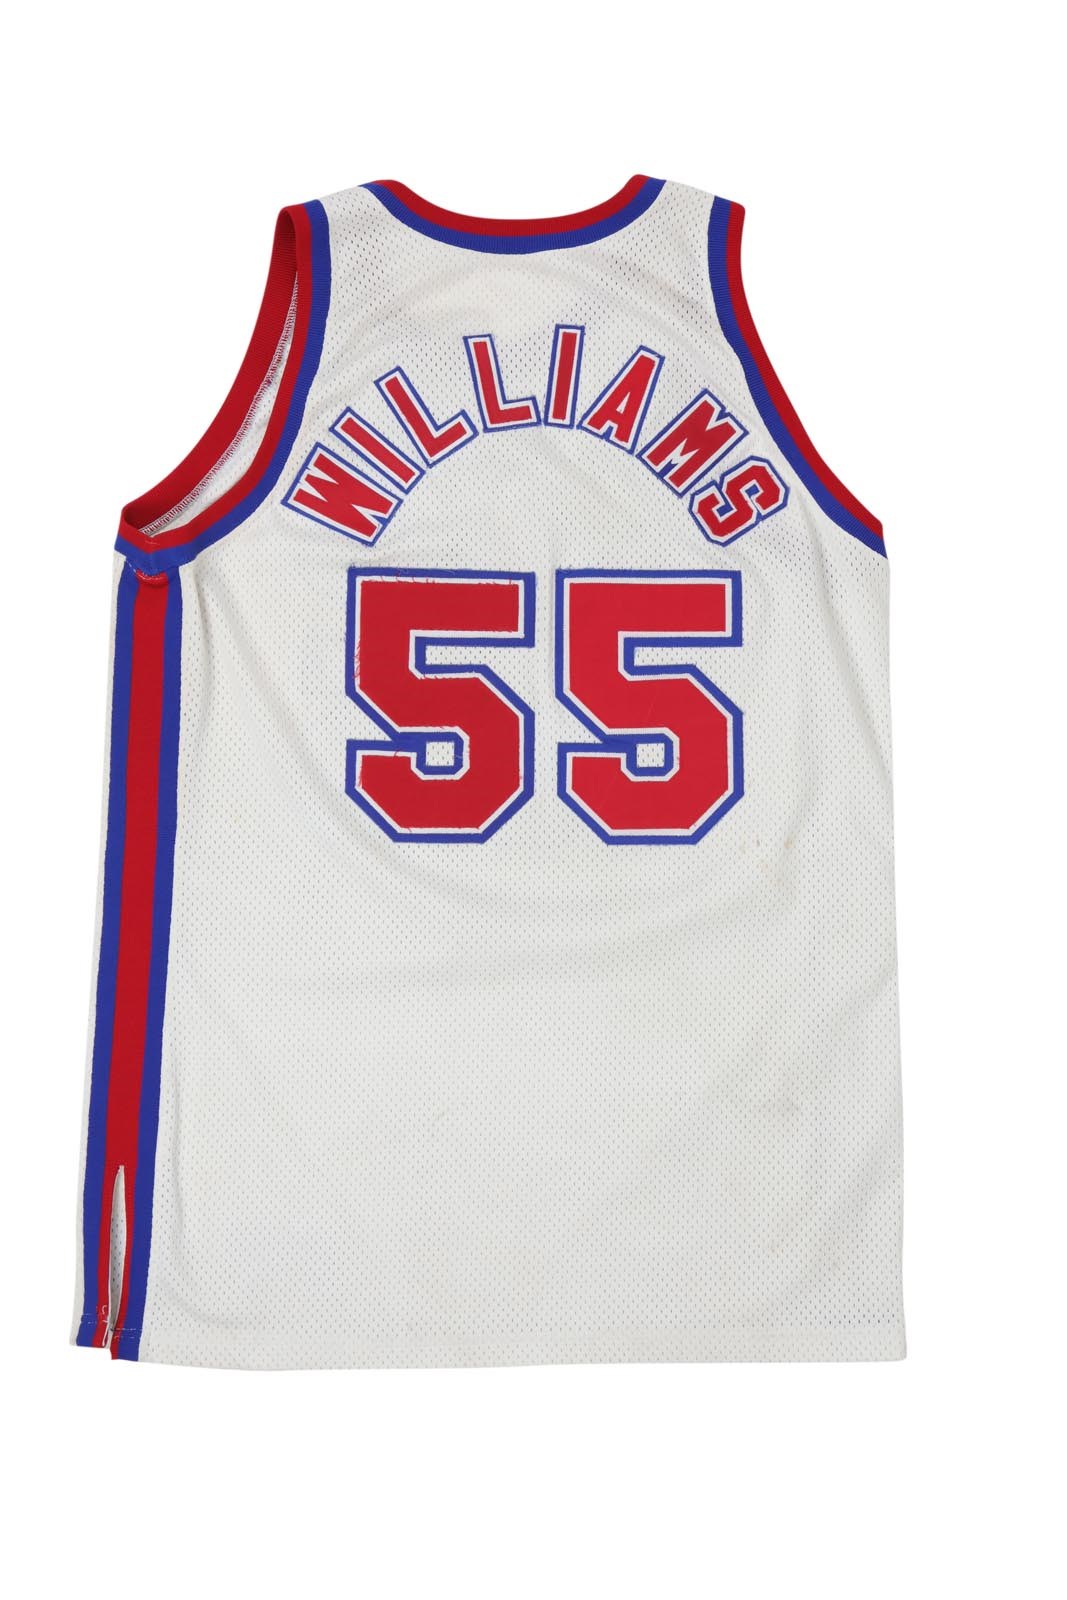 - 1994-95 Jayson Williams New Jersey Nets Game Worn Jersey